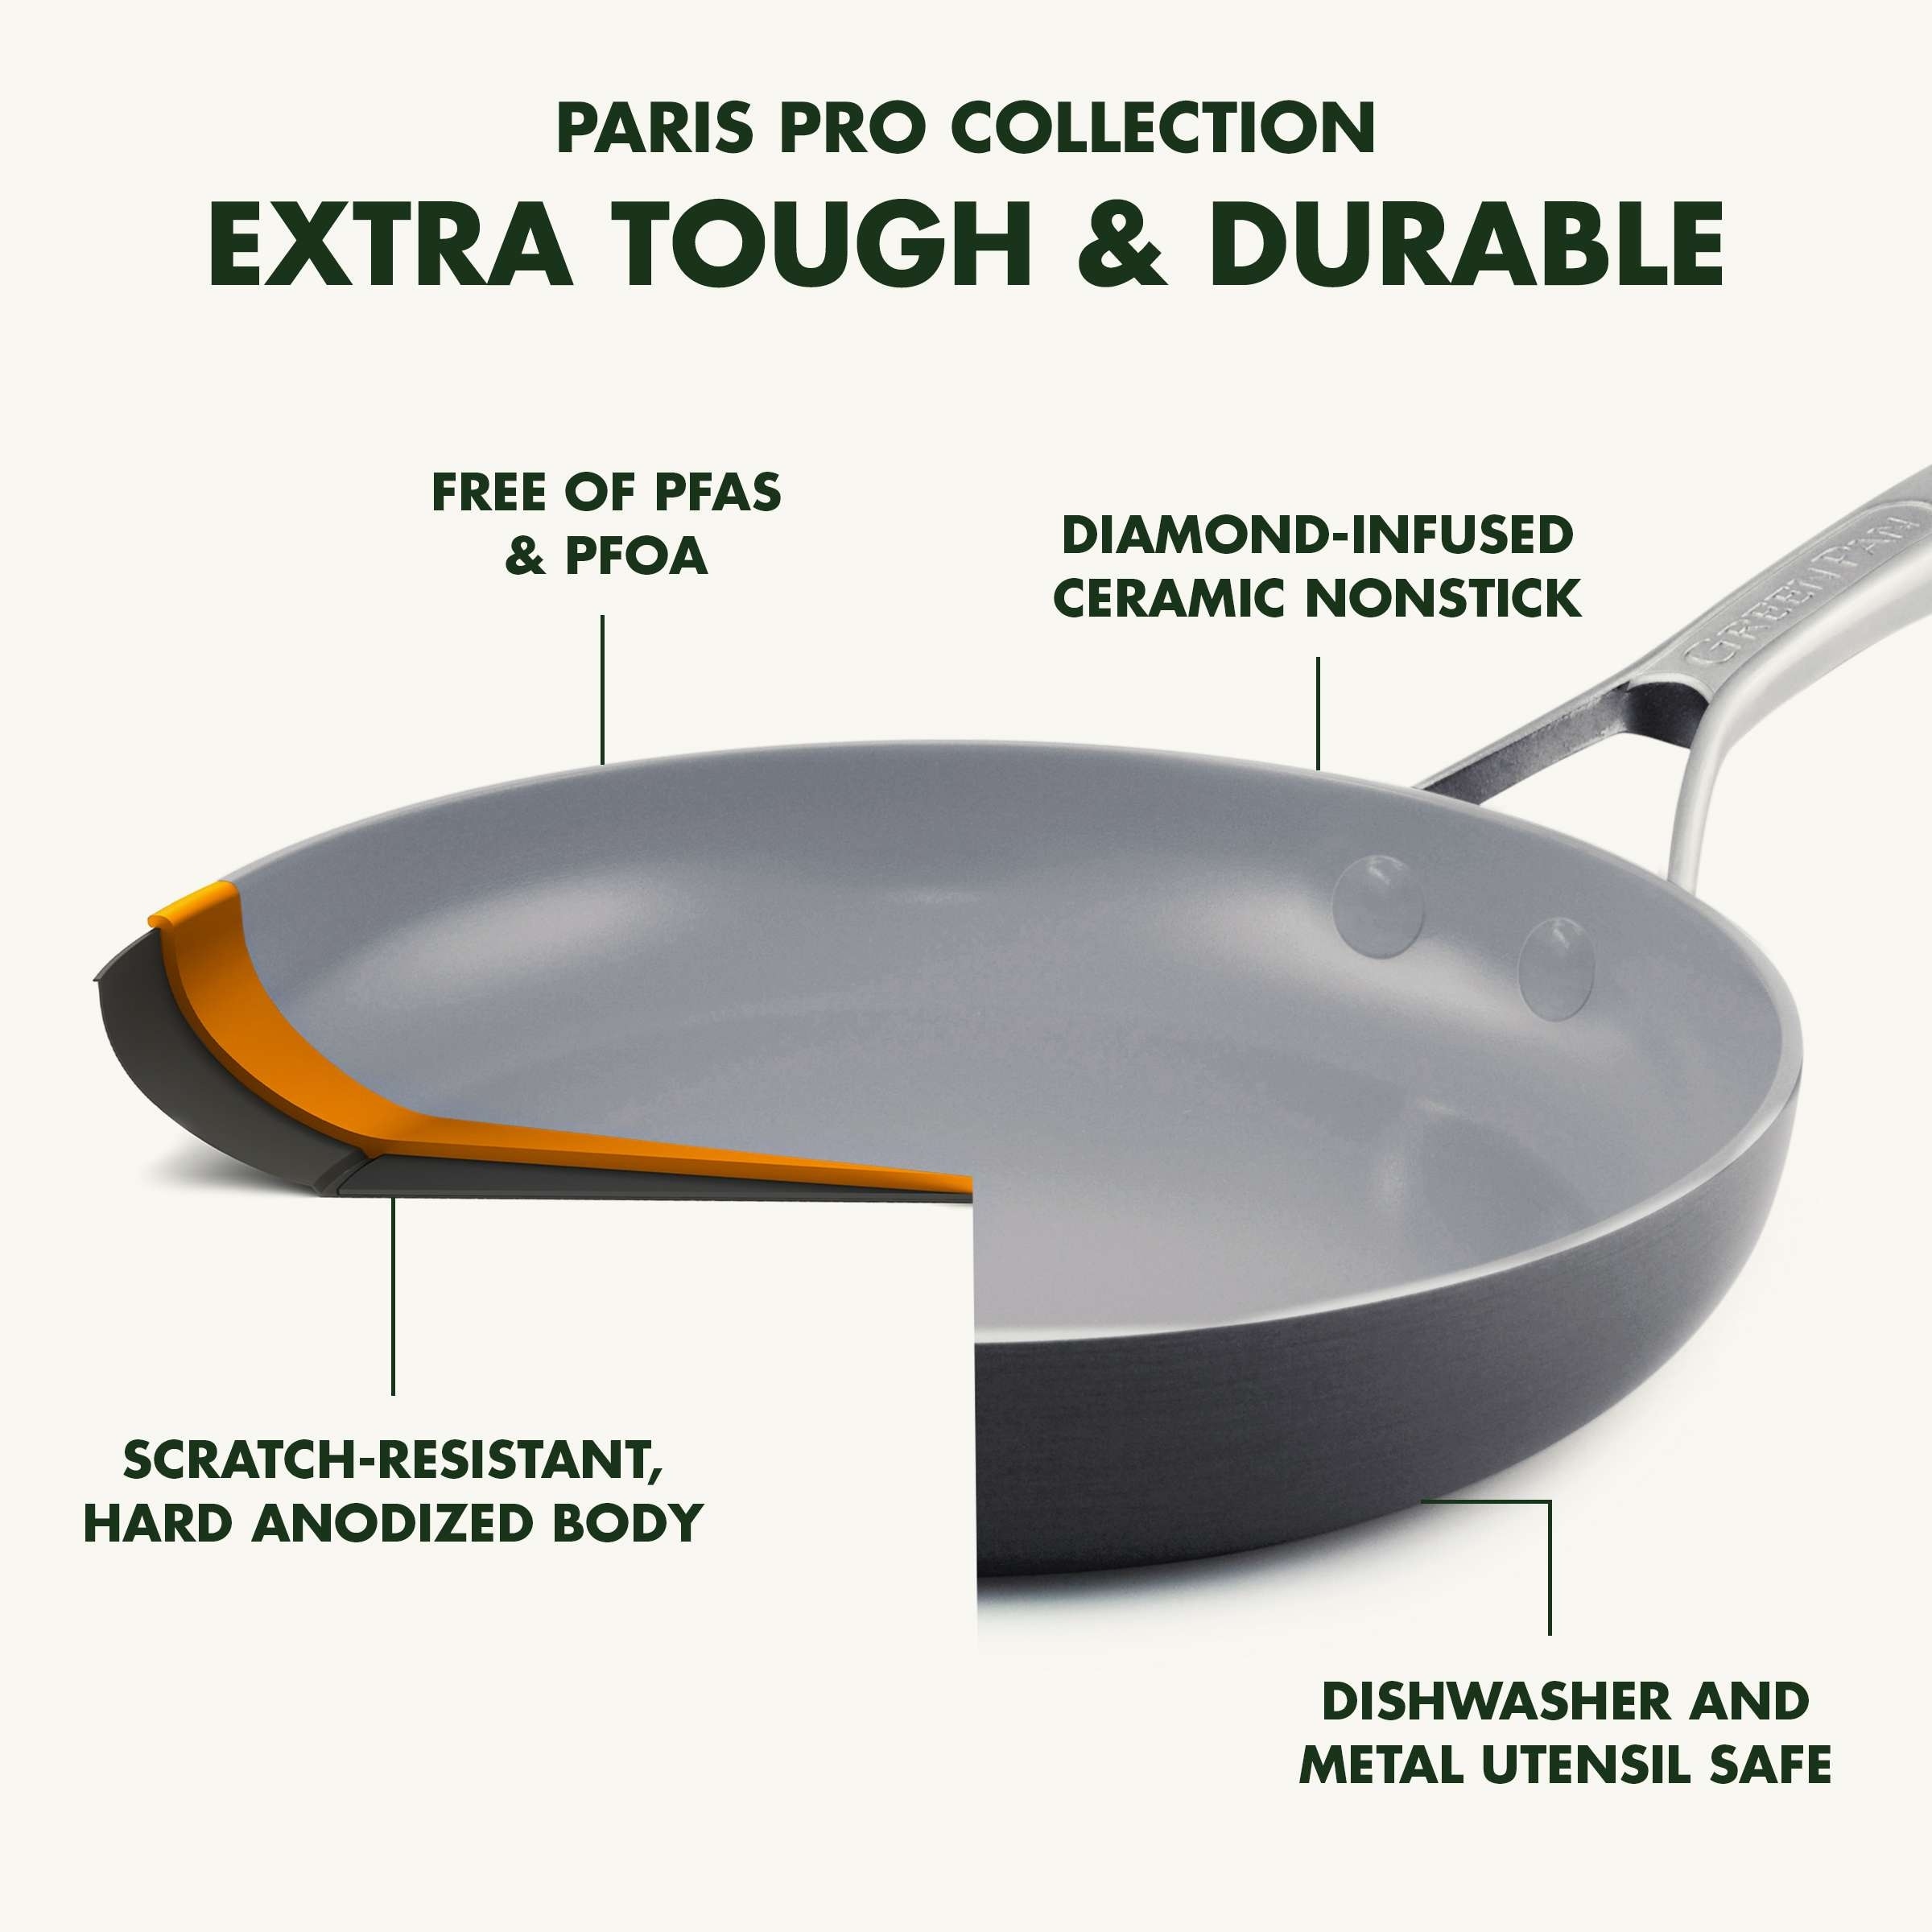 Green Pan Paris Pro Ceramic 11-Piece Non-Stick Cookware Set